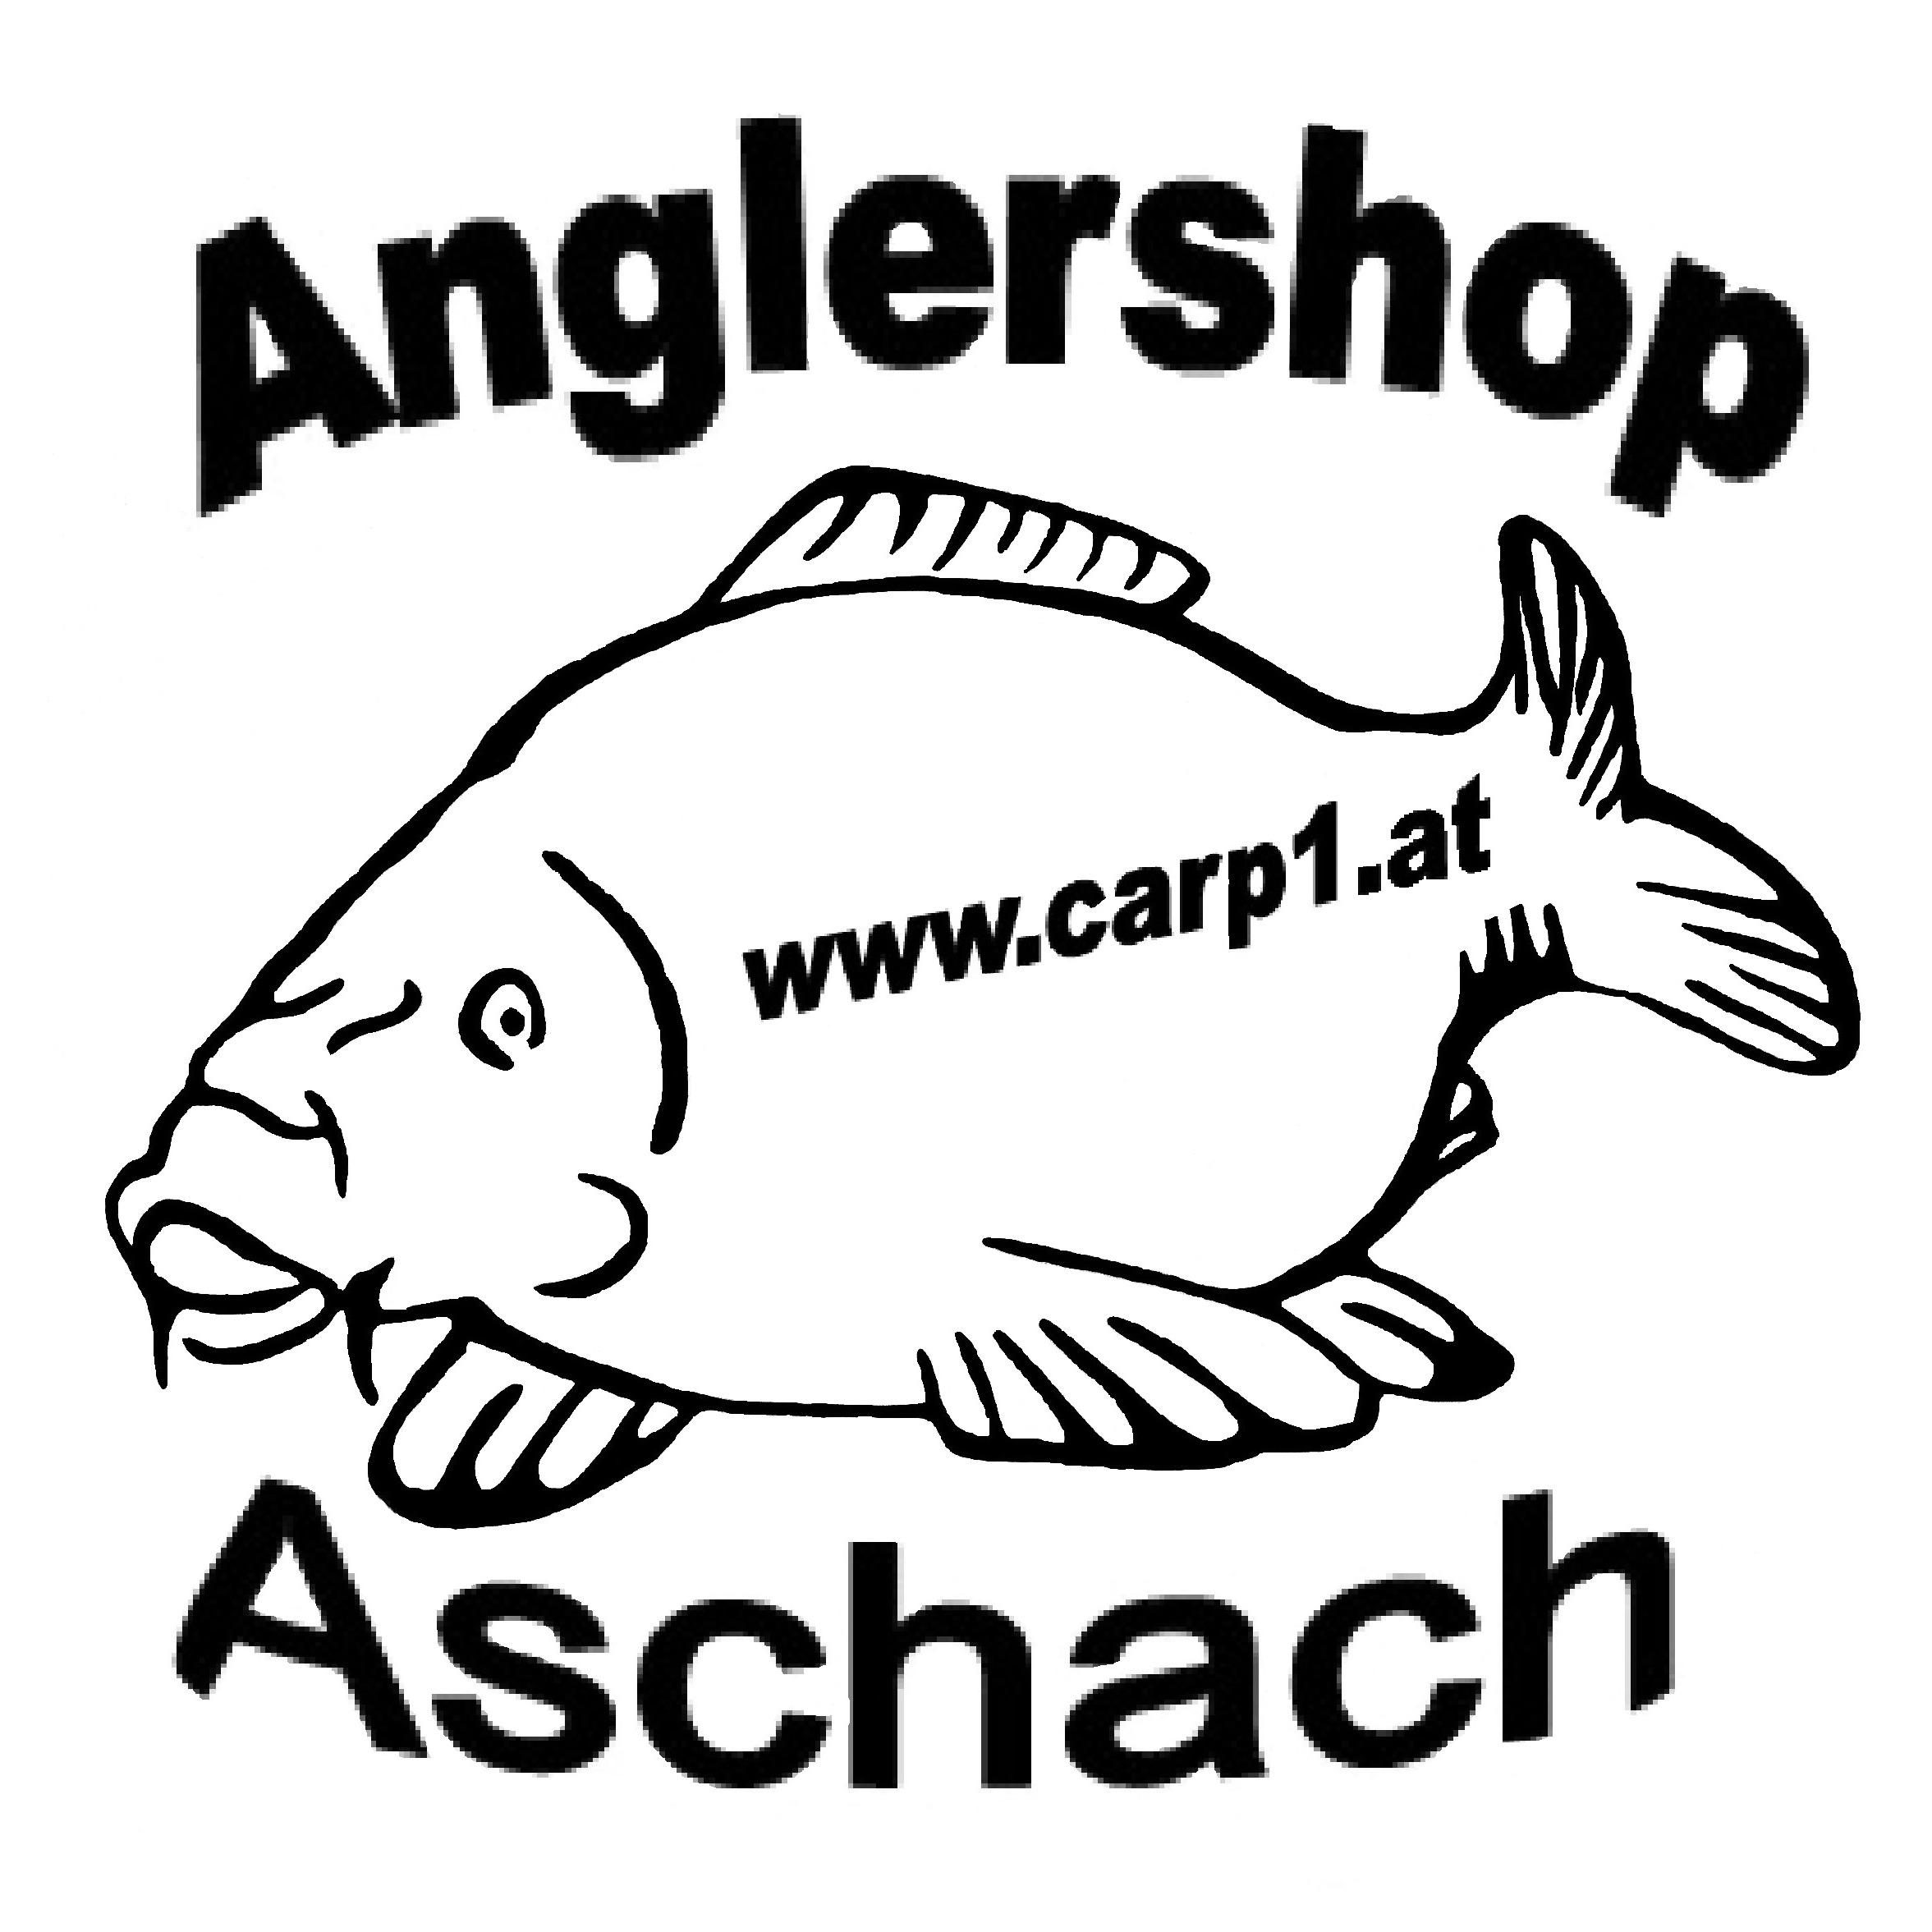 Anglershop Aschach Logo